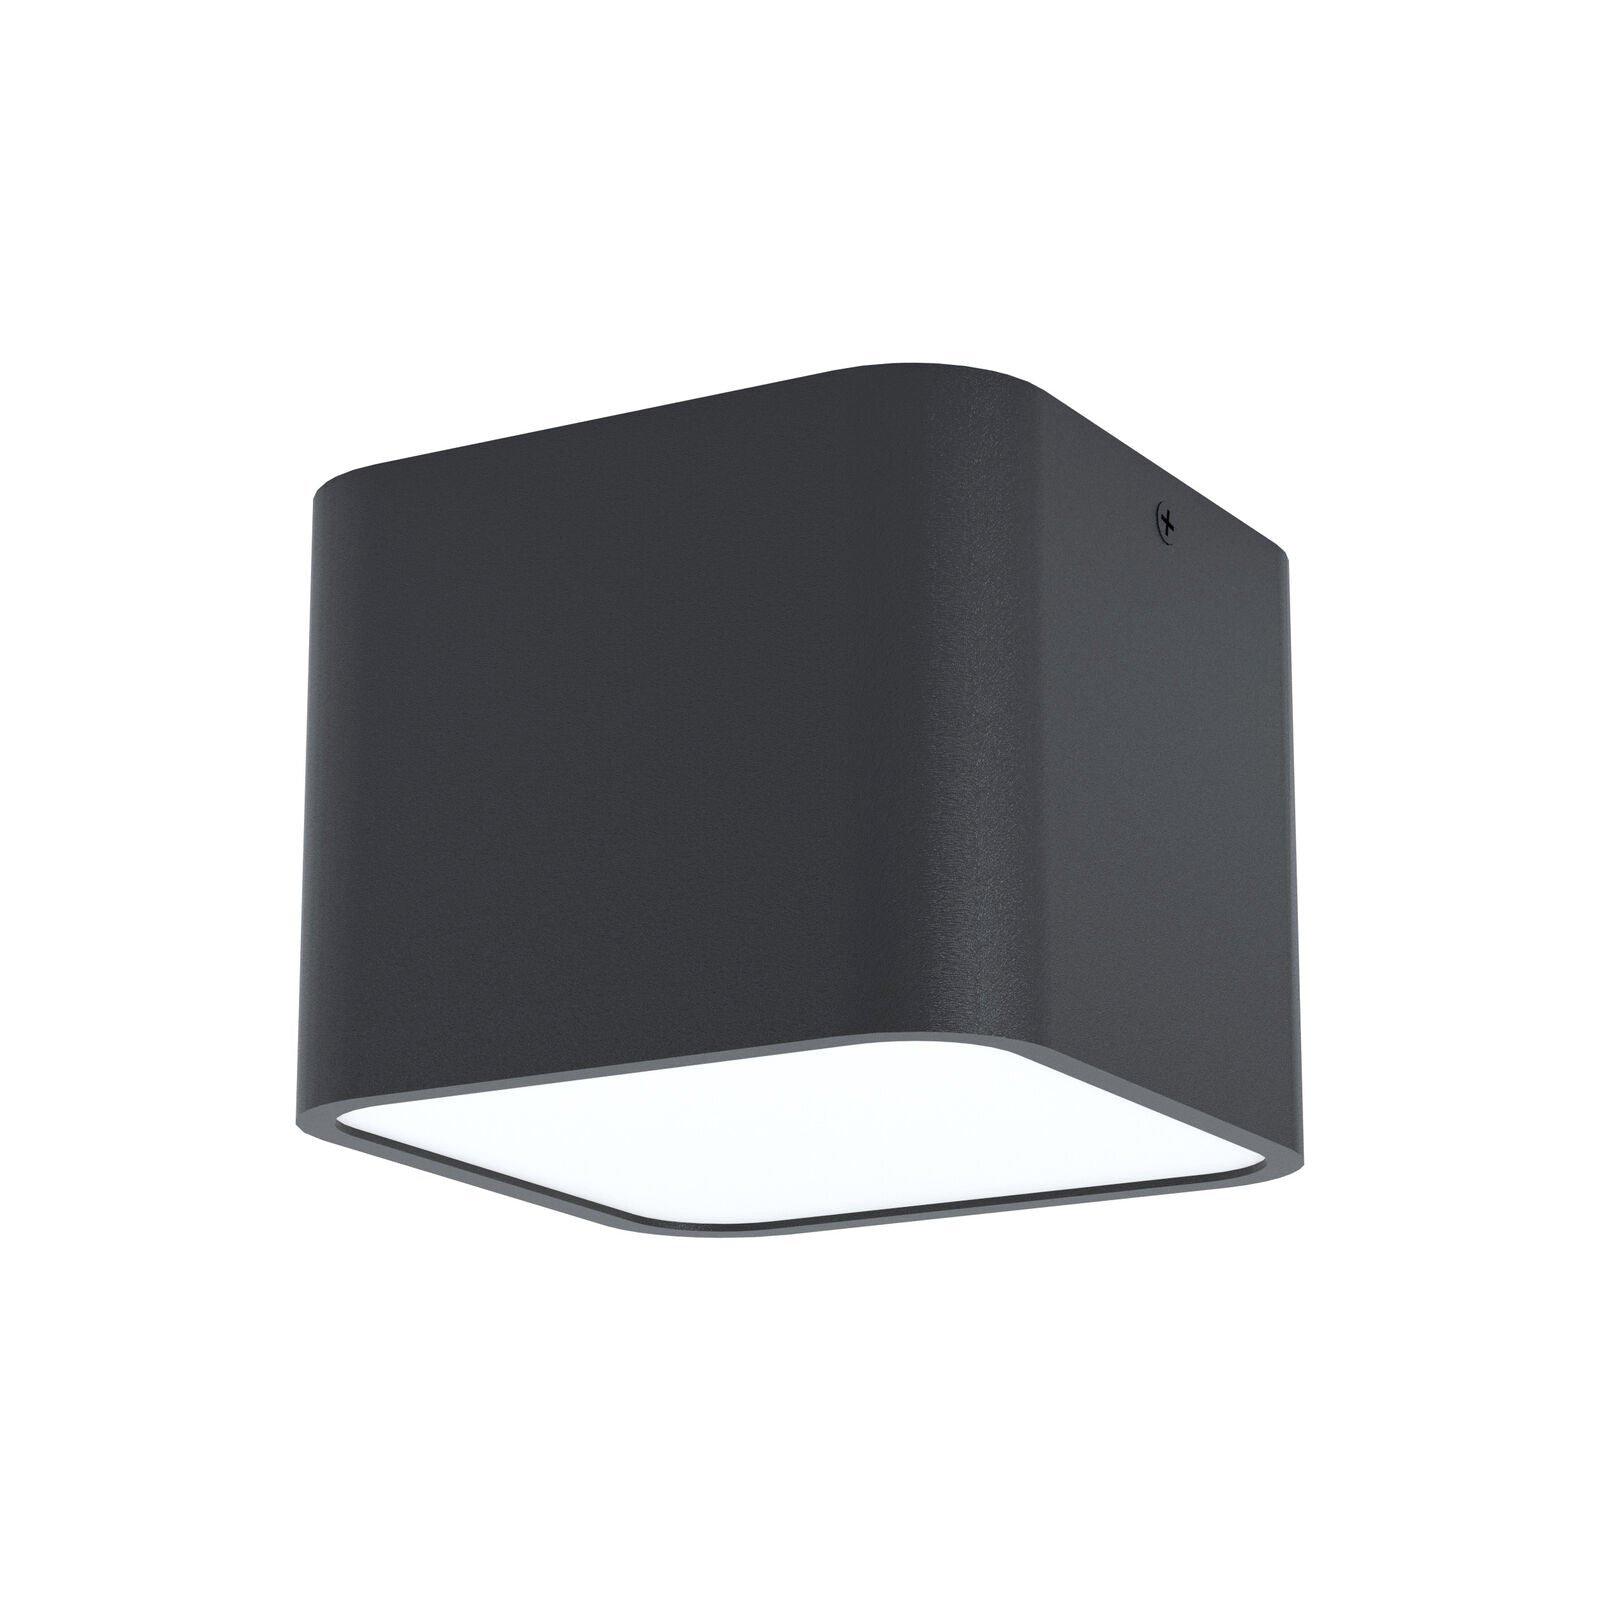 Wall / Ceiling Light Black Square Accent Downlight 1 x 28W E27 Bulb